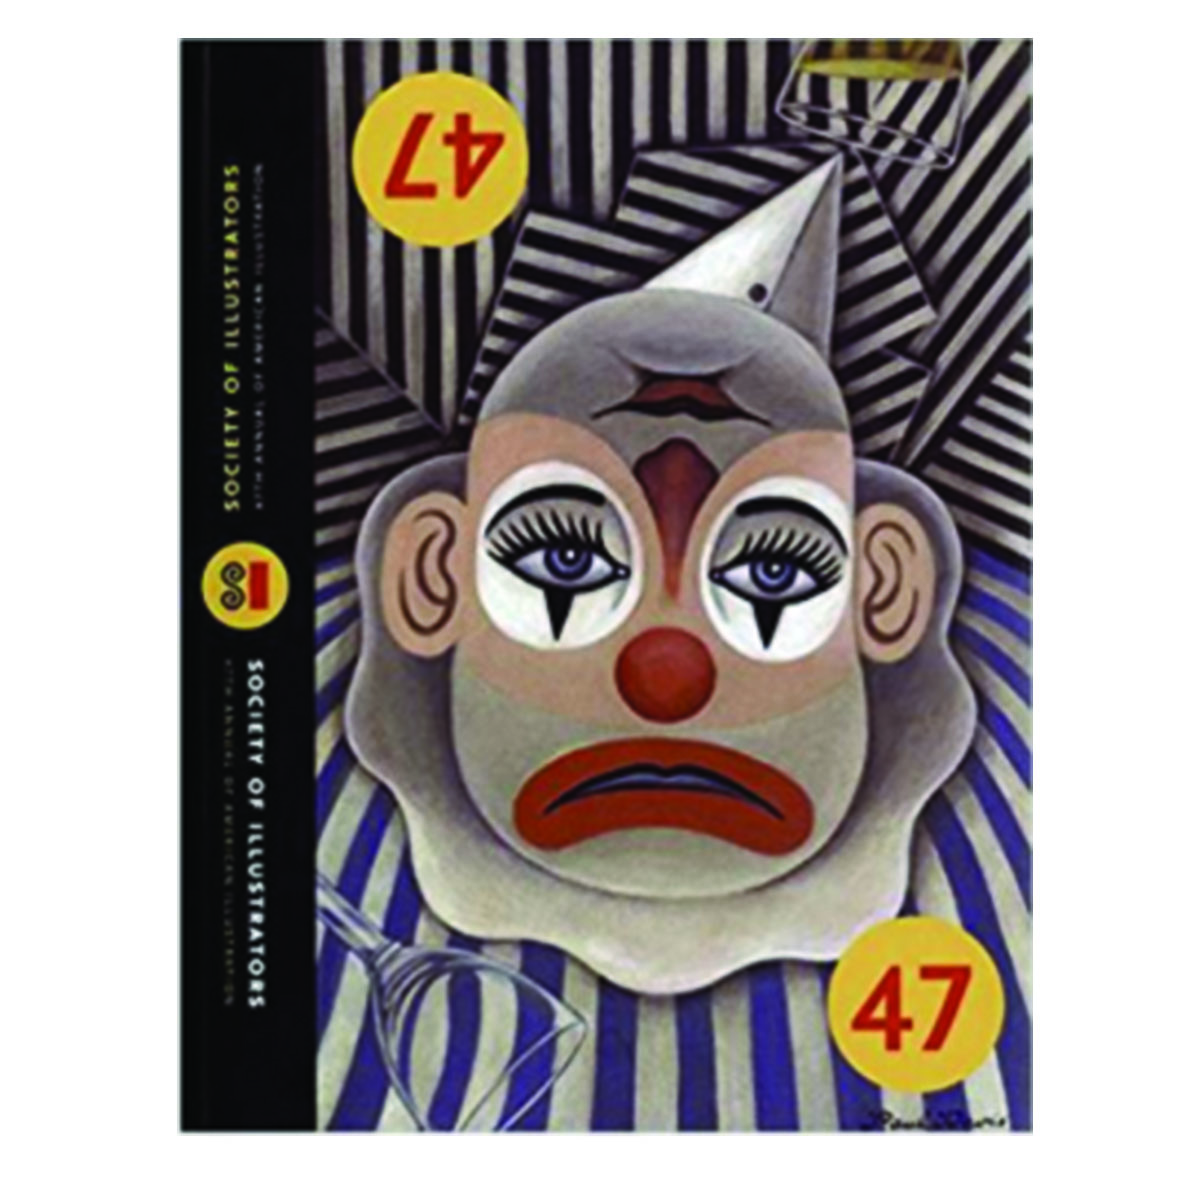 Illustrators Annual #47 – Society of Illustrators